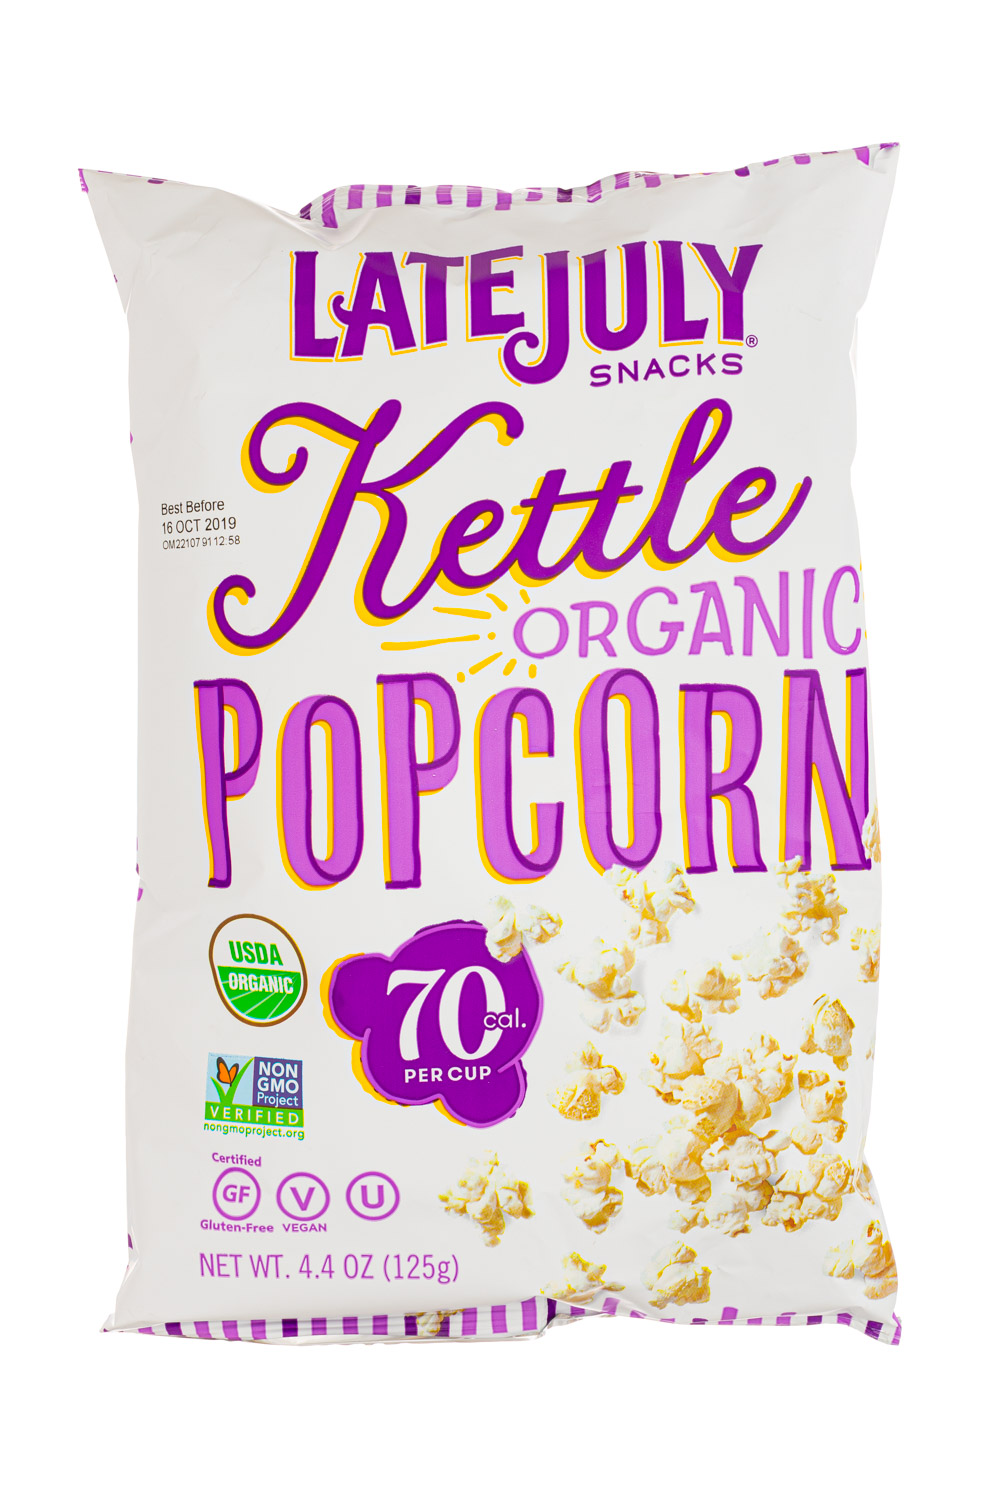 Kettle Organic Popcorn